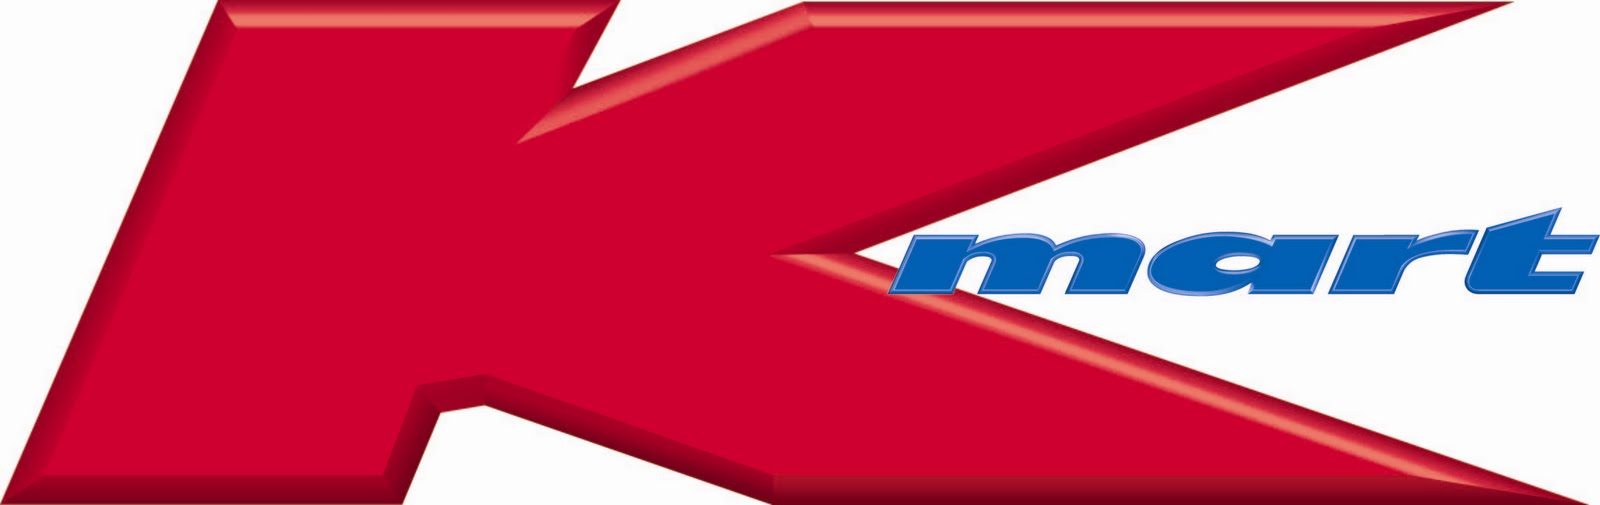 Kmart Logo (2)